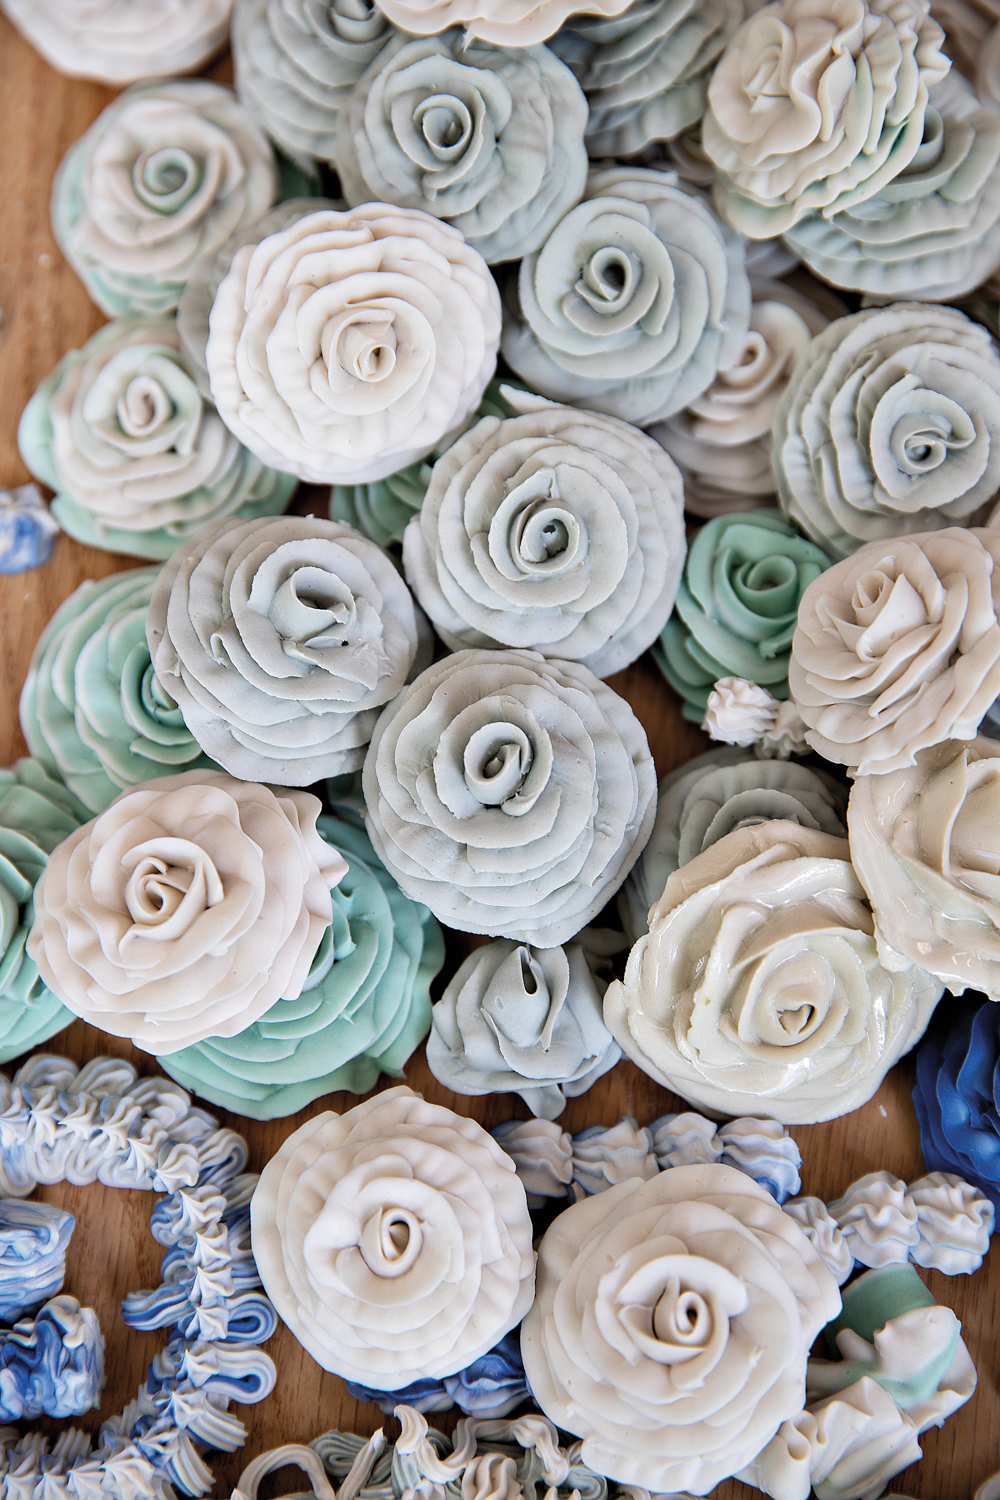 Porcelain roses in numerous pastel colors